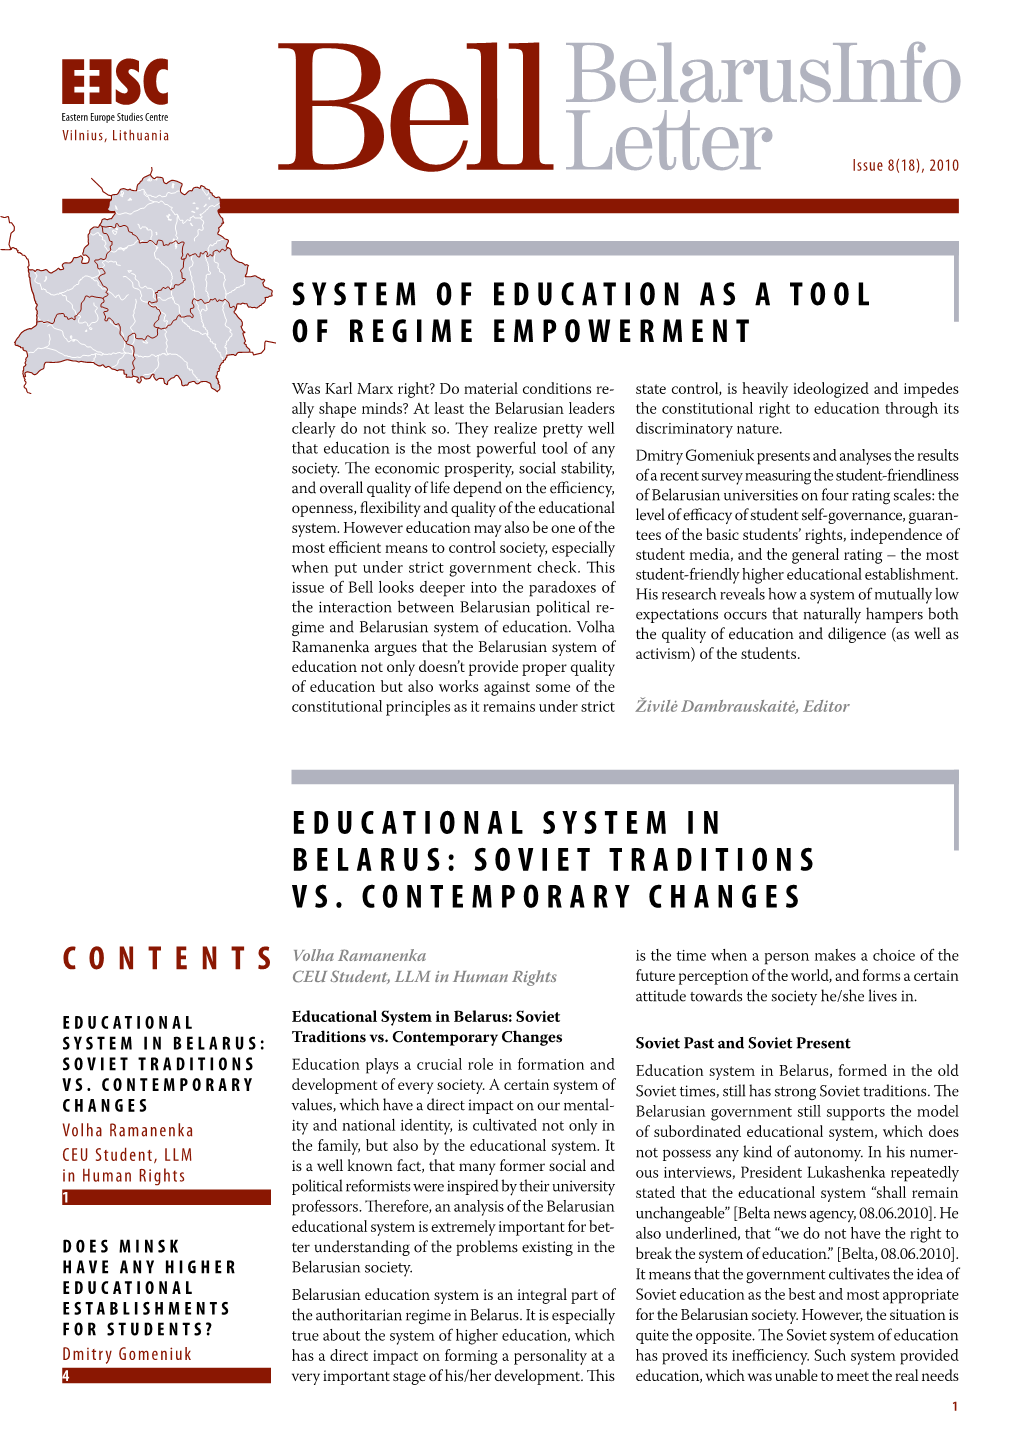 Educational System in Belarus: Soviet Traditions Vs